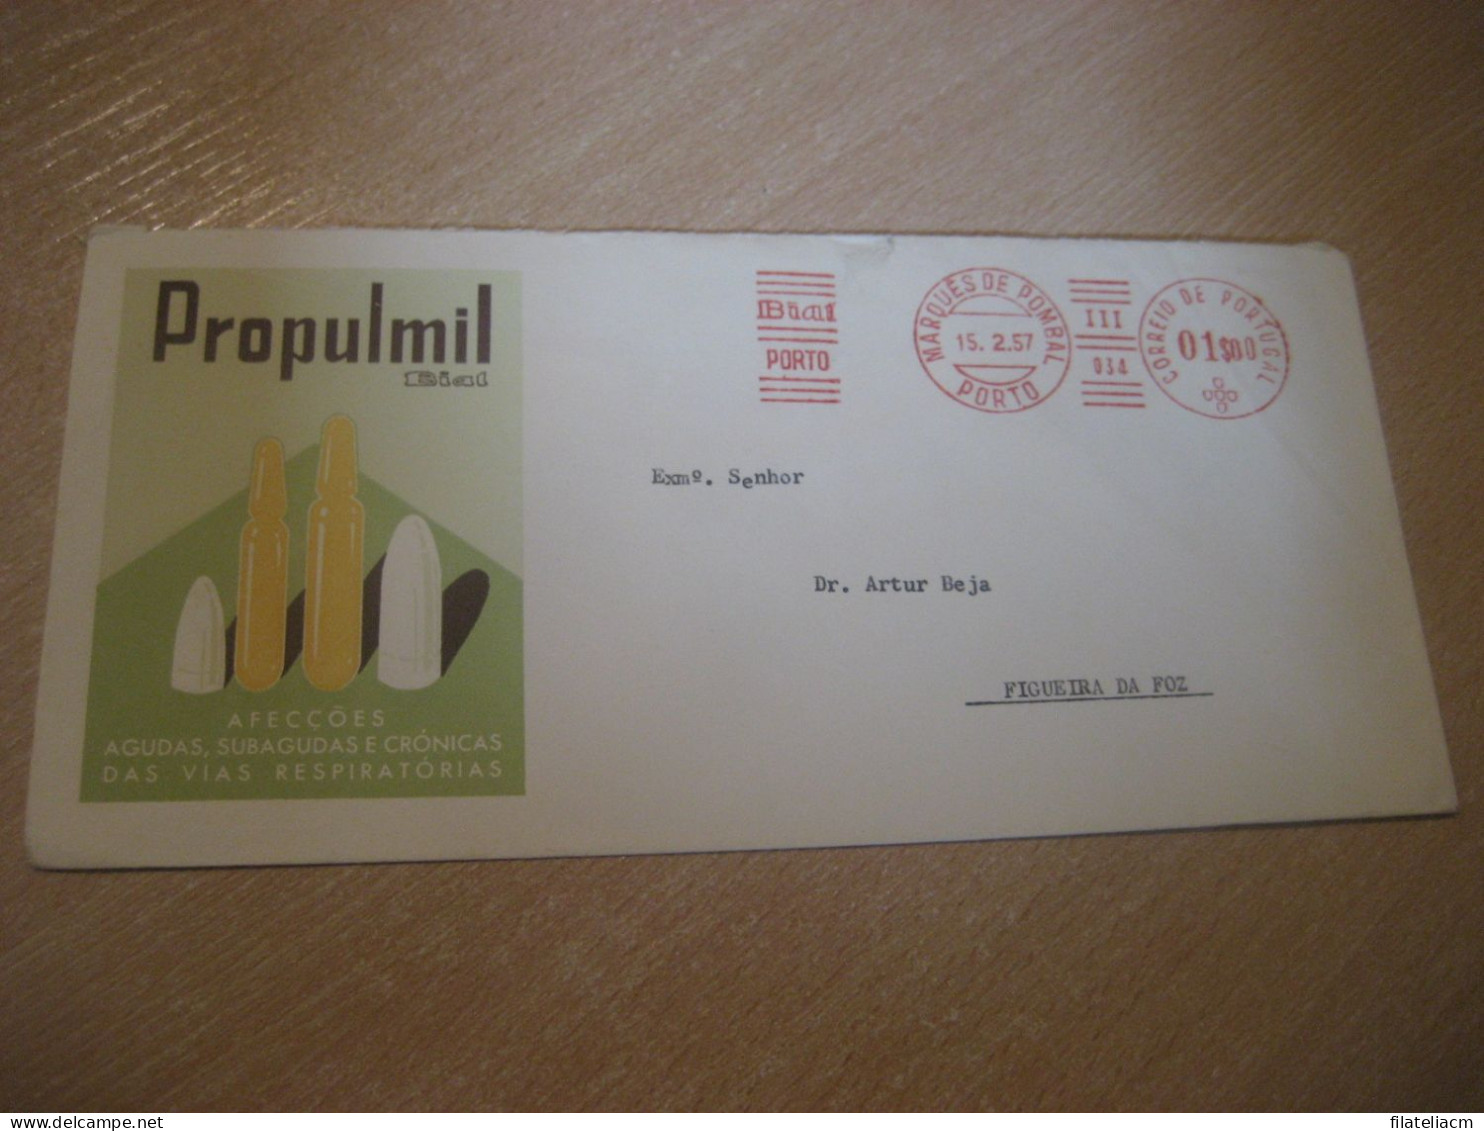 PORTO 1957 To Figueira Da Foz Bial Propulmil Pharmacy Health Chemical Meter Mail Cancel Cover PORTUGAL - Briefe U. Dokumente